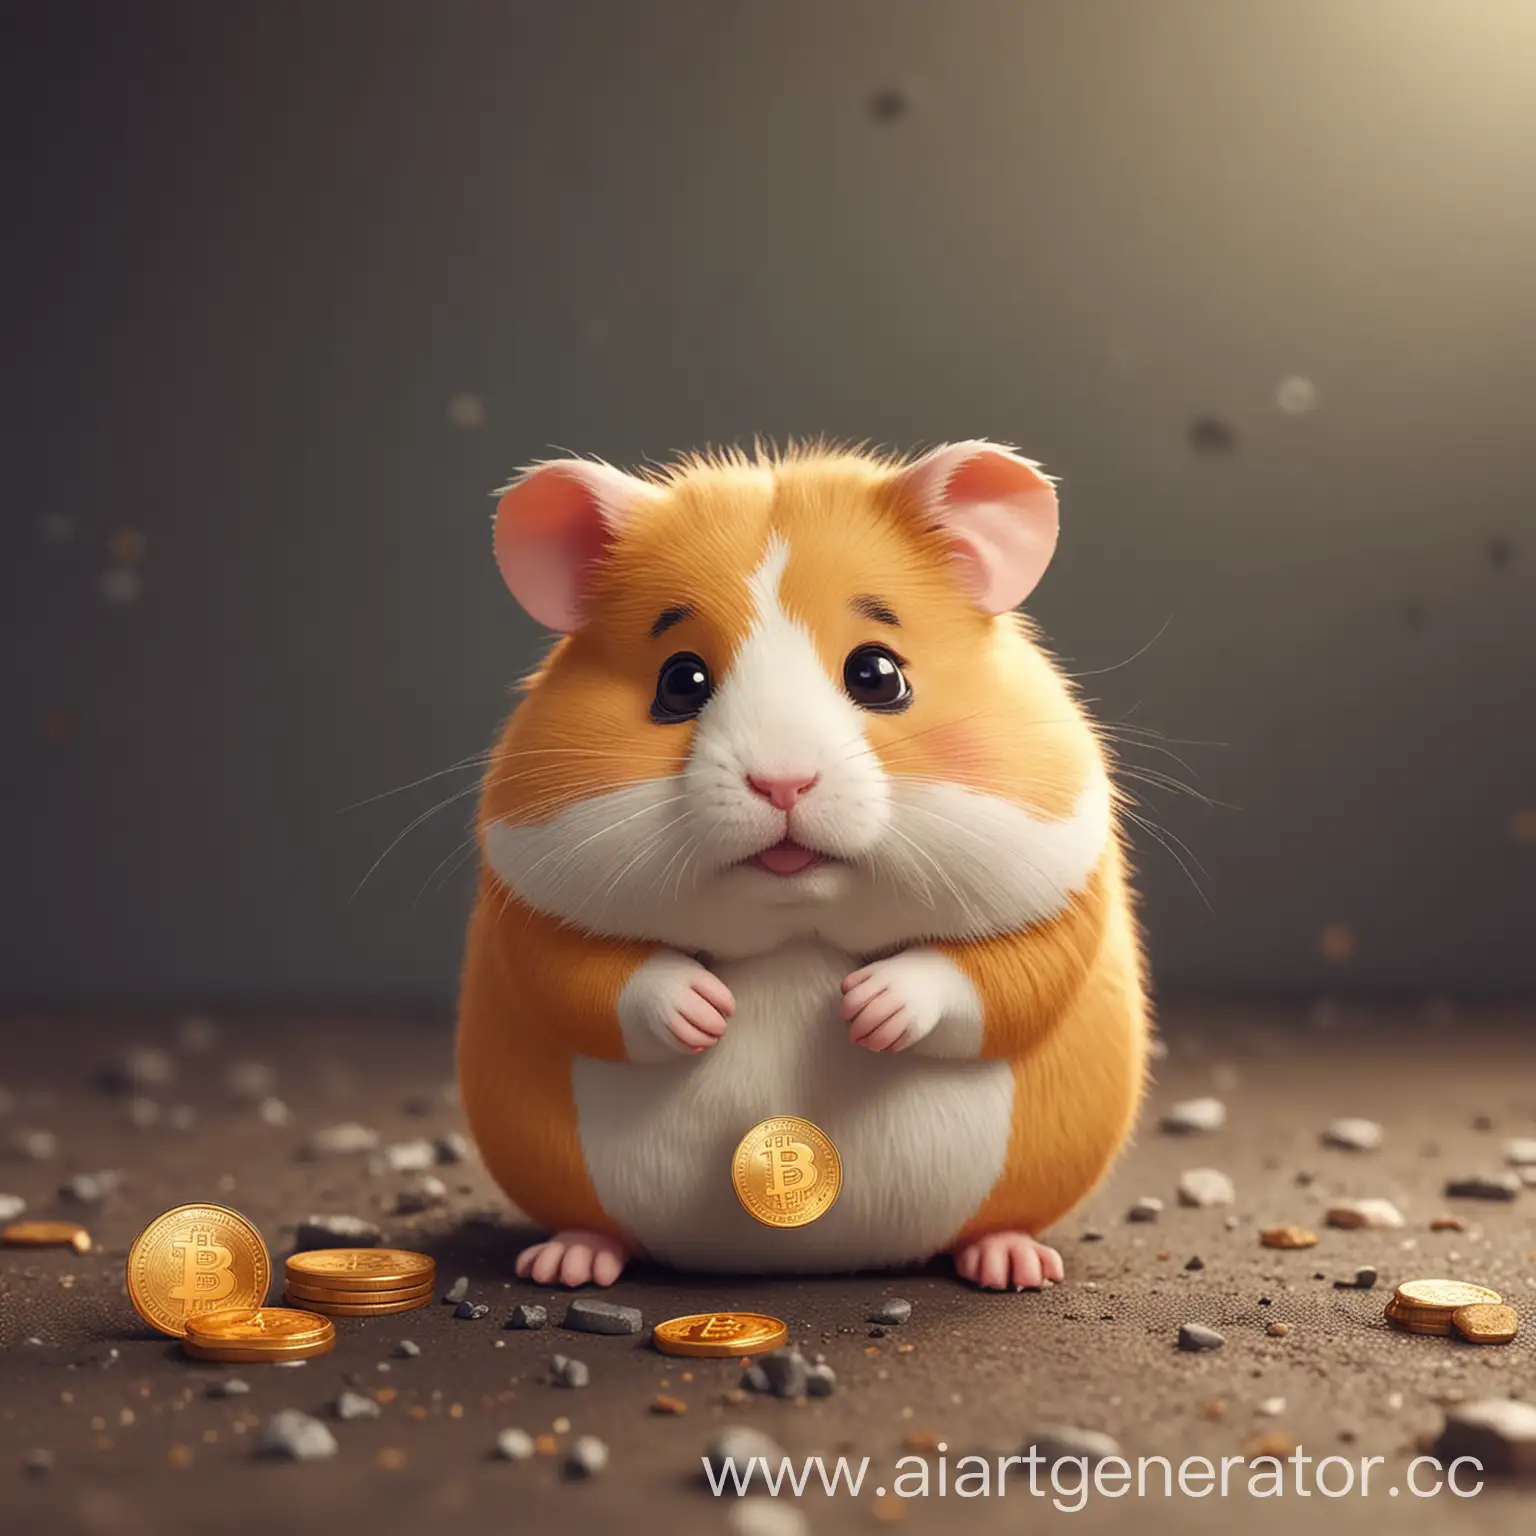 Depressed-Cartoon-Hamster-Reacts-to-Bitcoin-Price-Drop